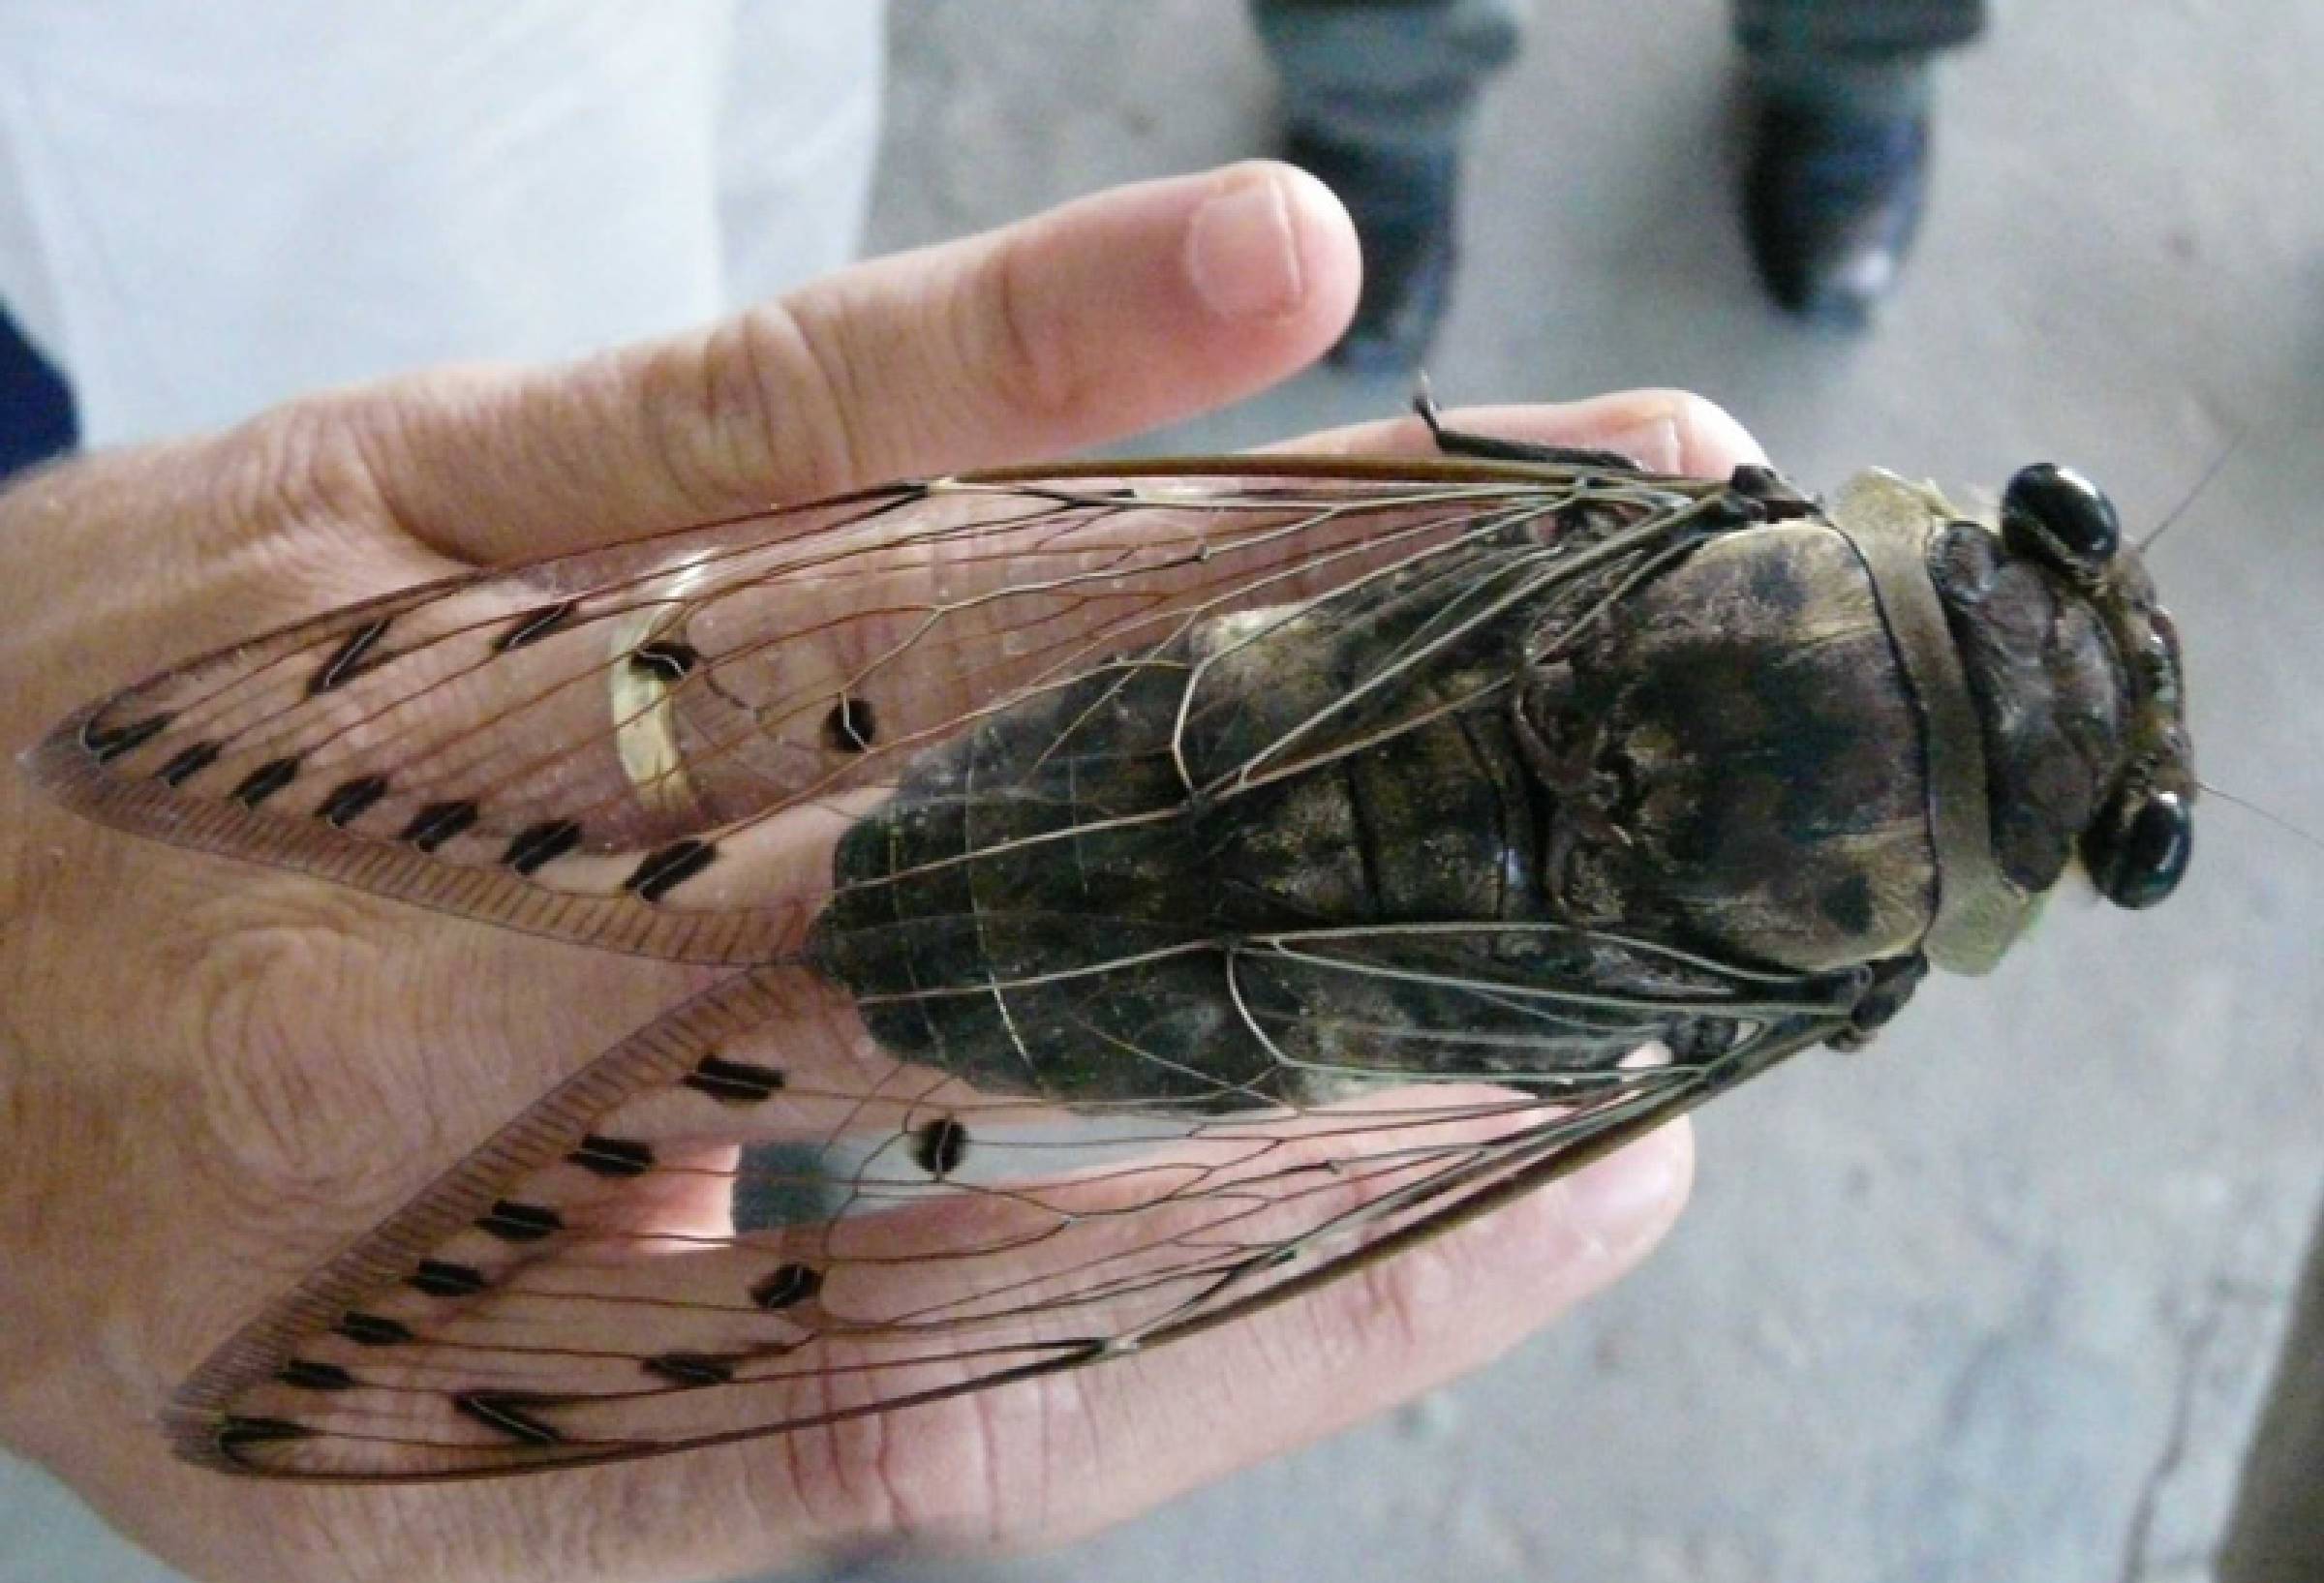 Large Cicada